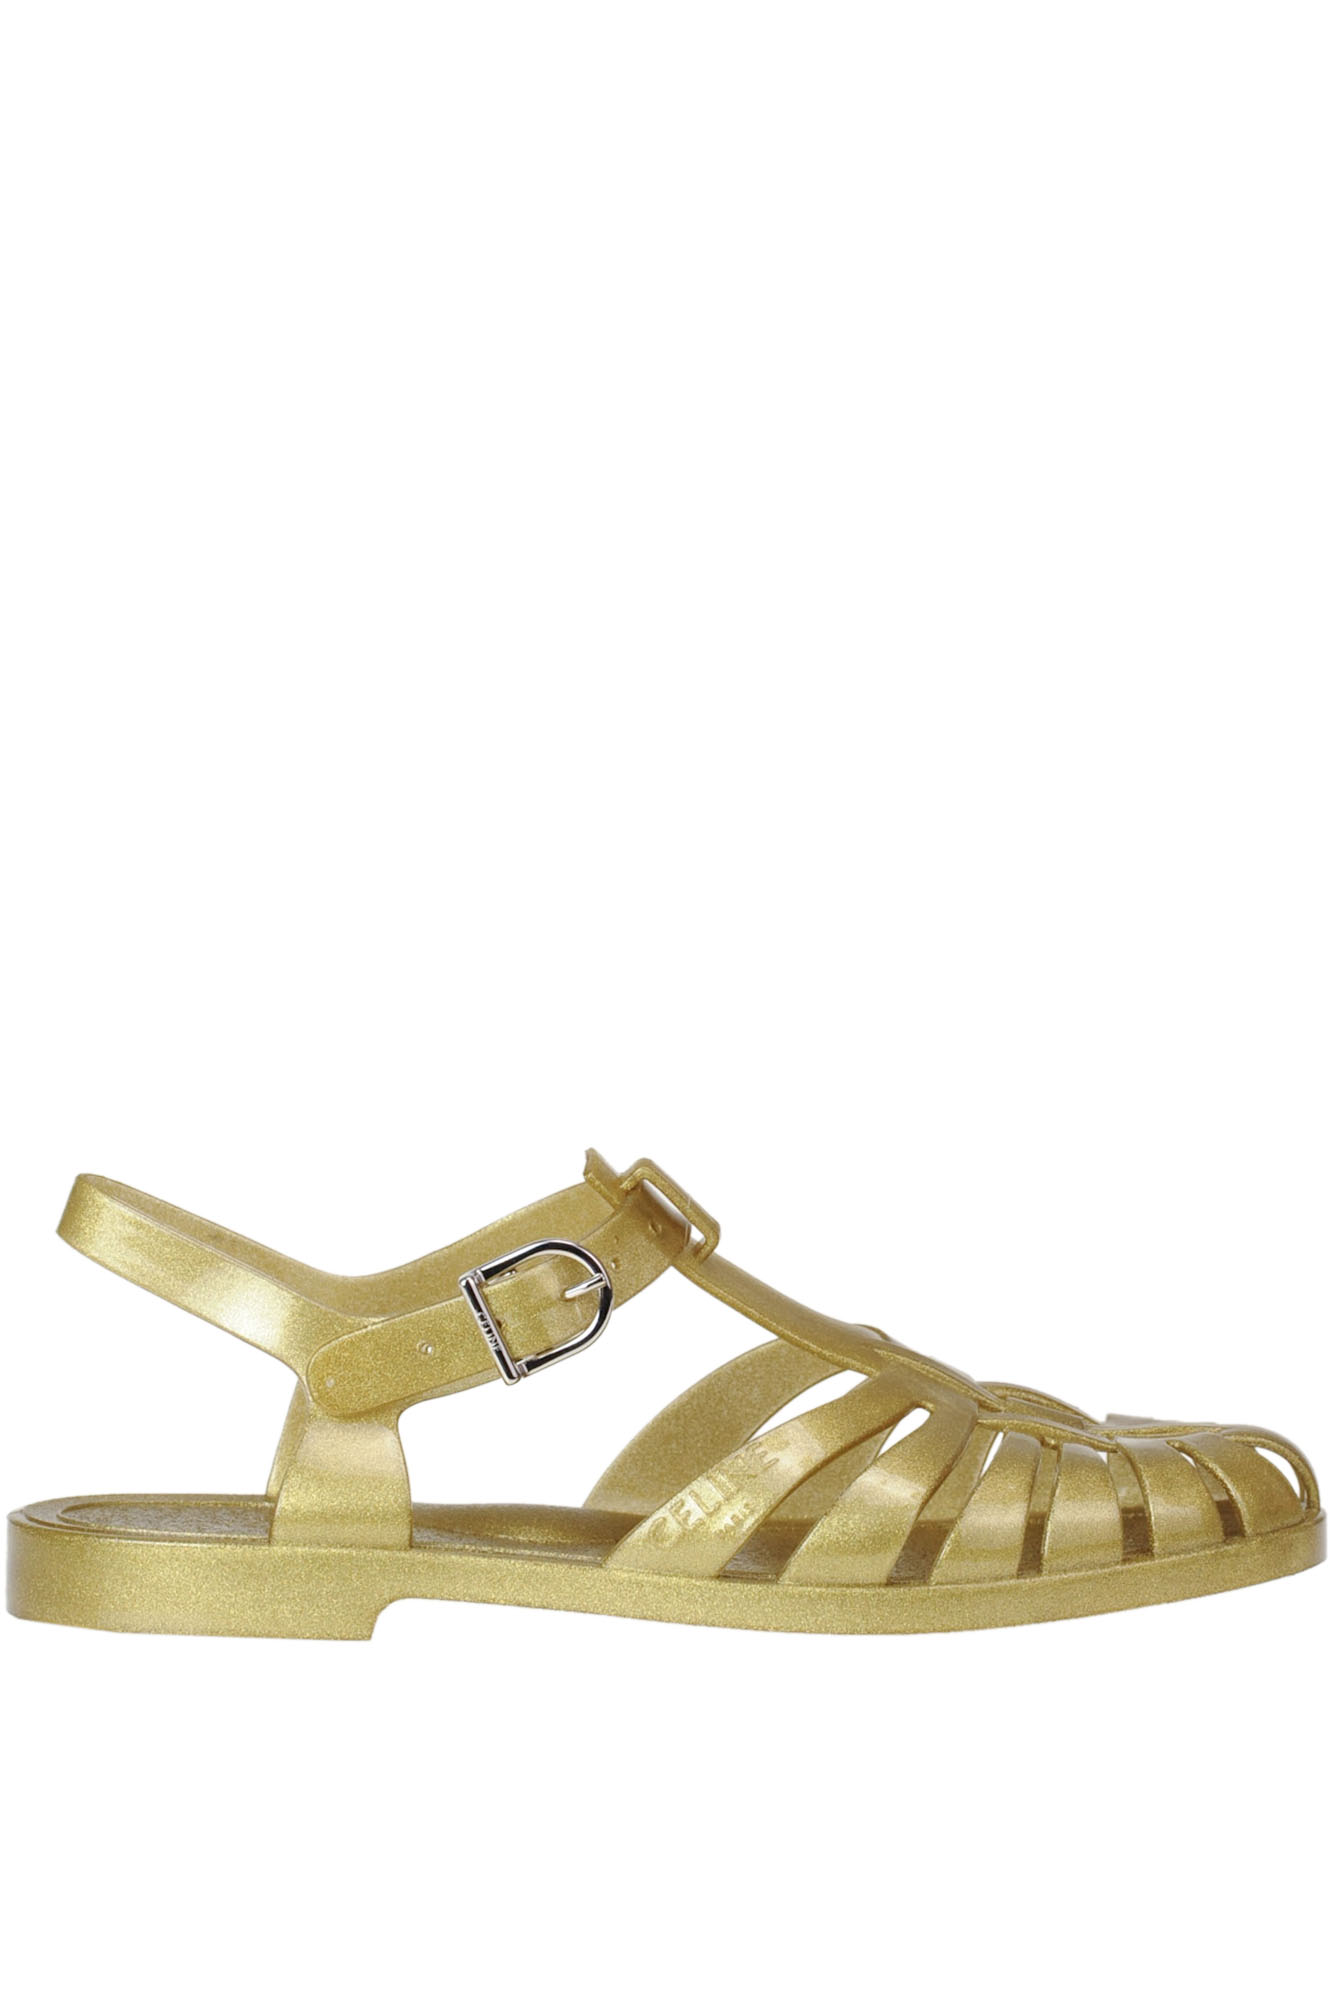 Celine Glittered Rubber Sandals In Gold